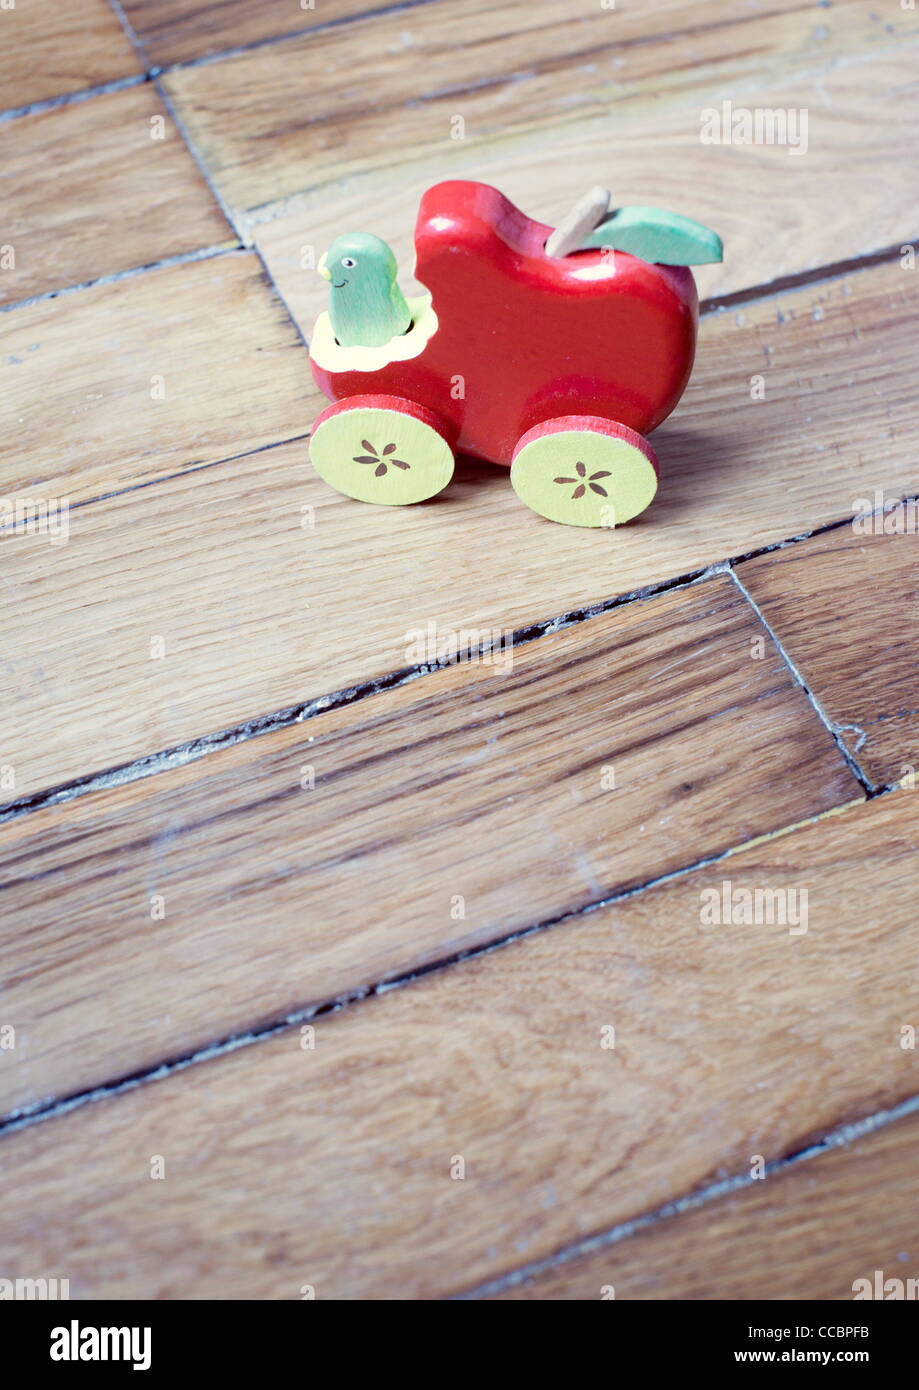 Toy car on hardwood floor Stock Photo